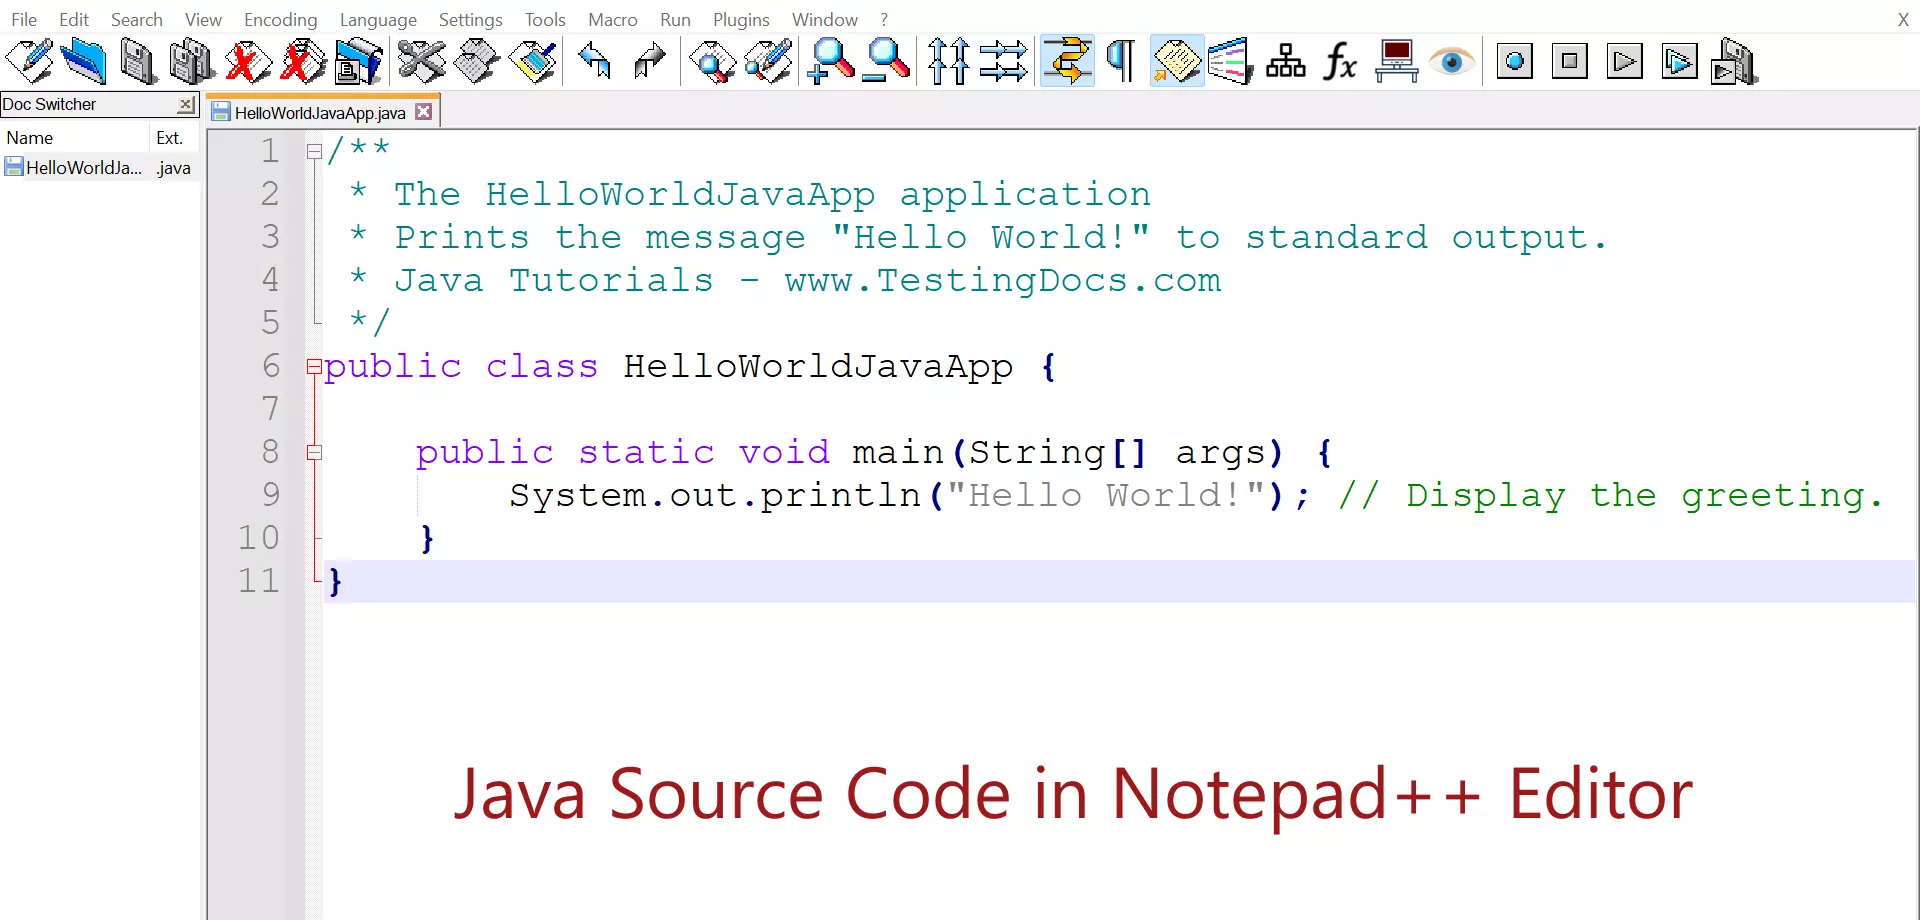 Java Source Code Notepad++ Editor